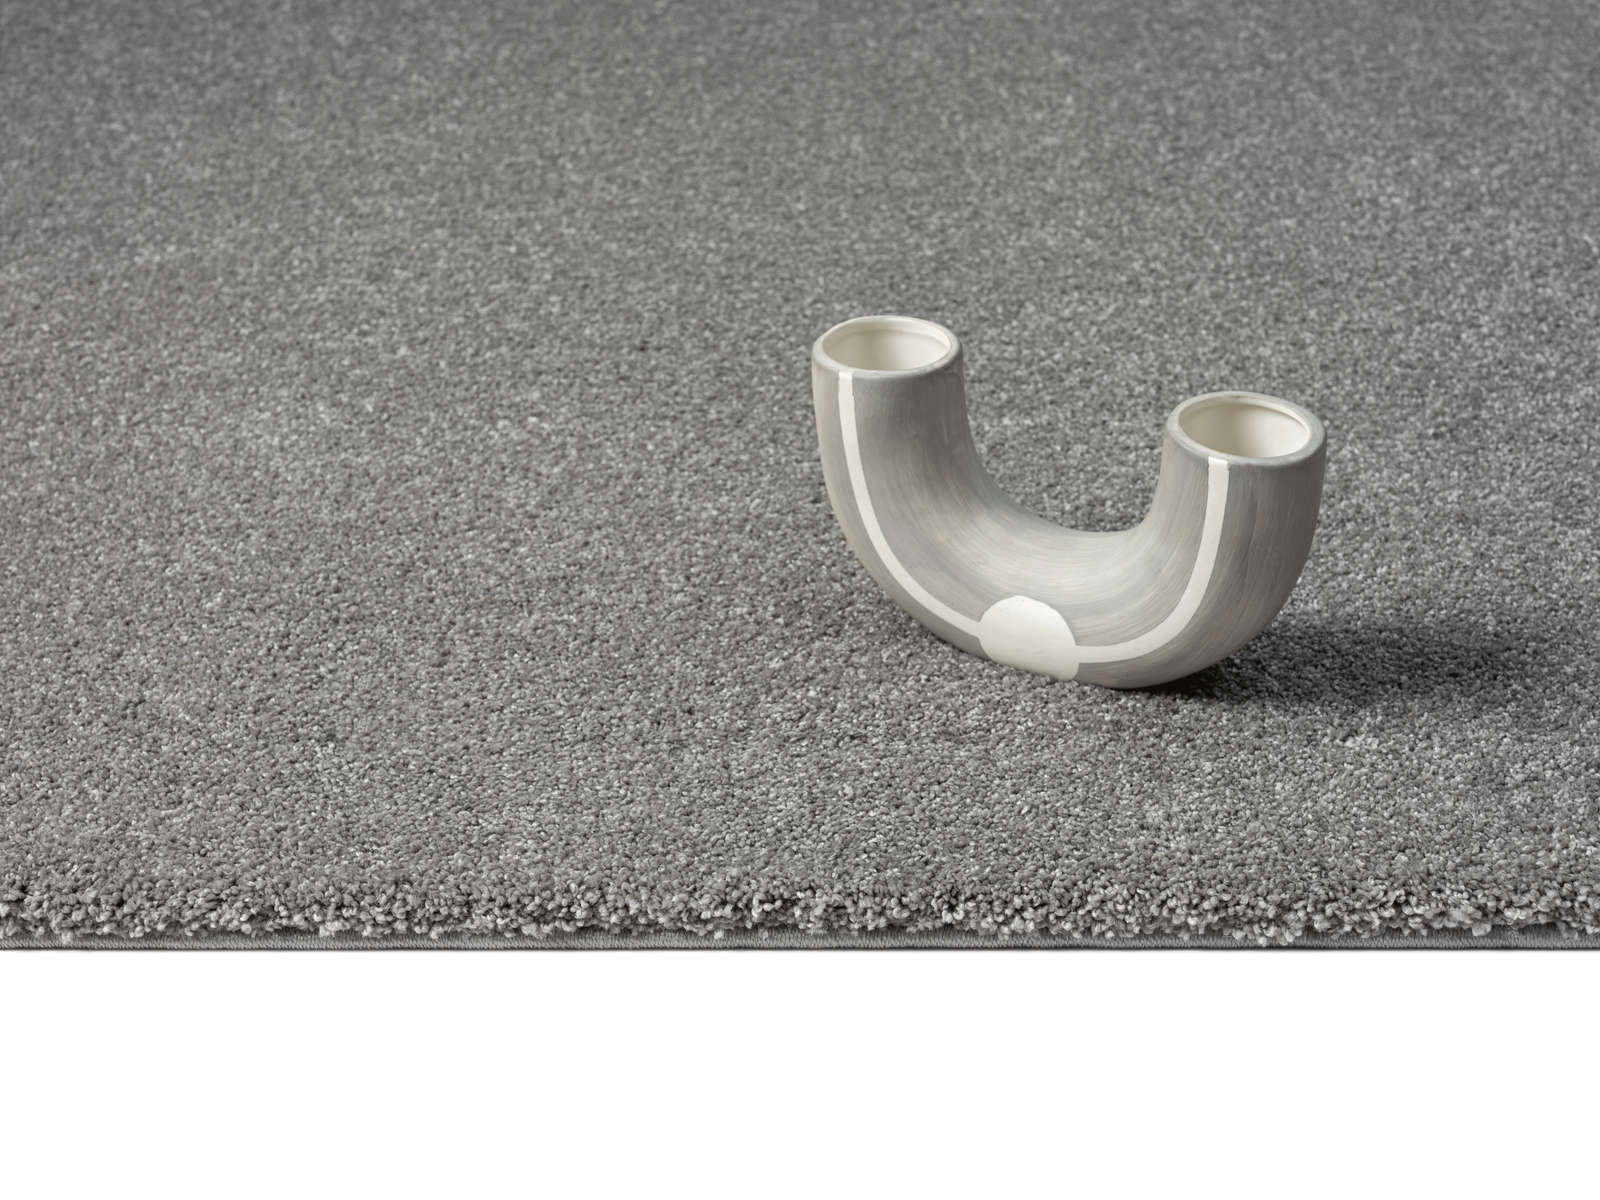             Fluffy short pile carpet in grey - 110 x 60 cm
        